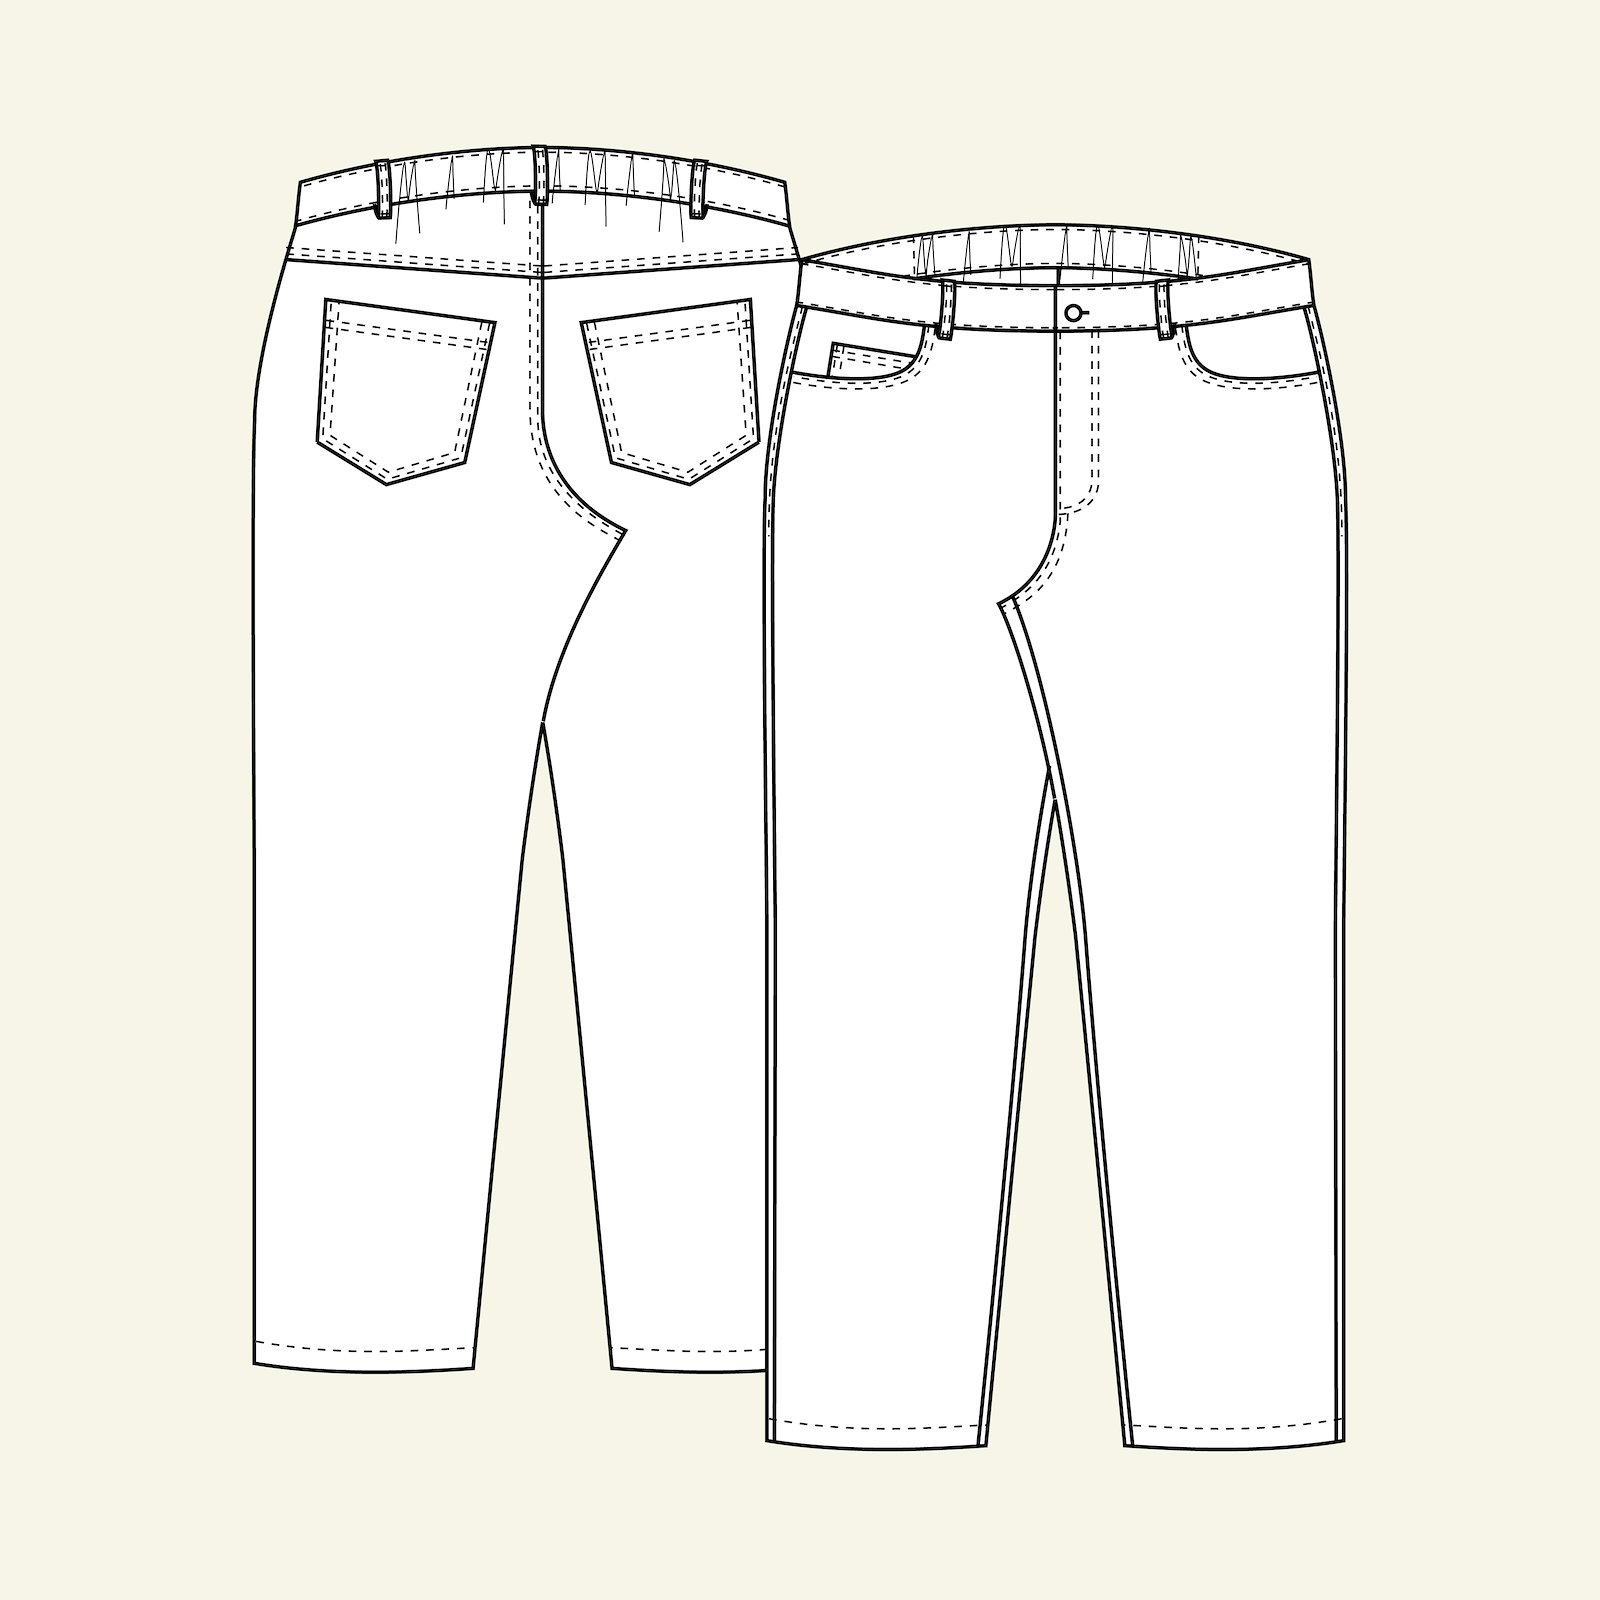 Klassisch Jeans mit Gummiband hinter, 46 p70007000_p70007001_p70007002_p70007003_p70007004_pack_b